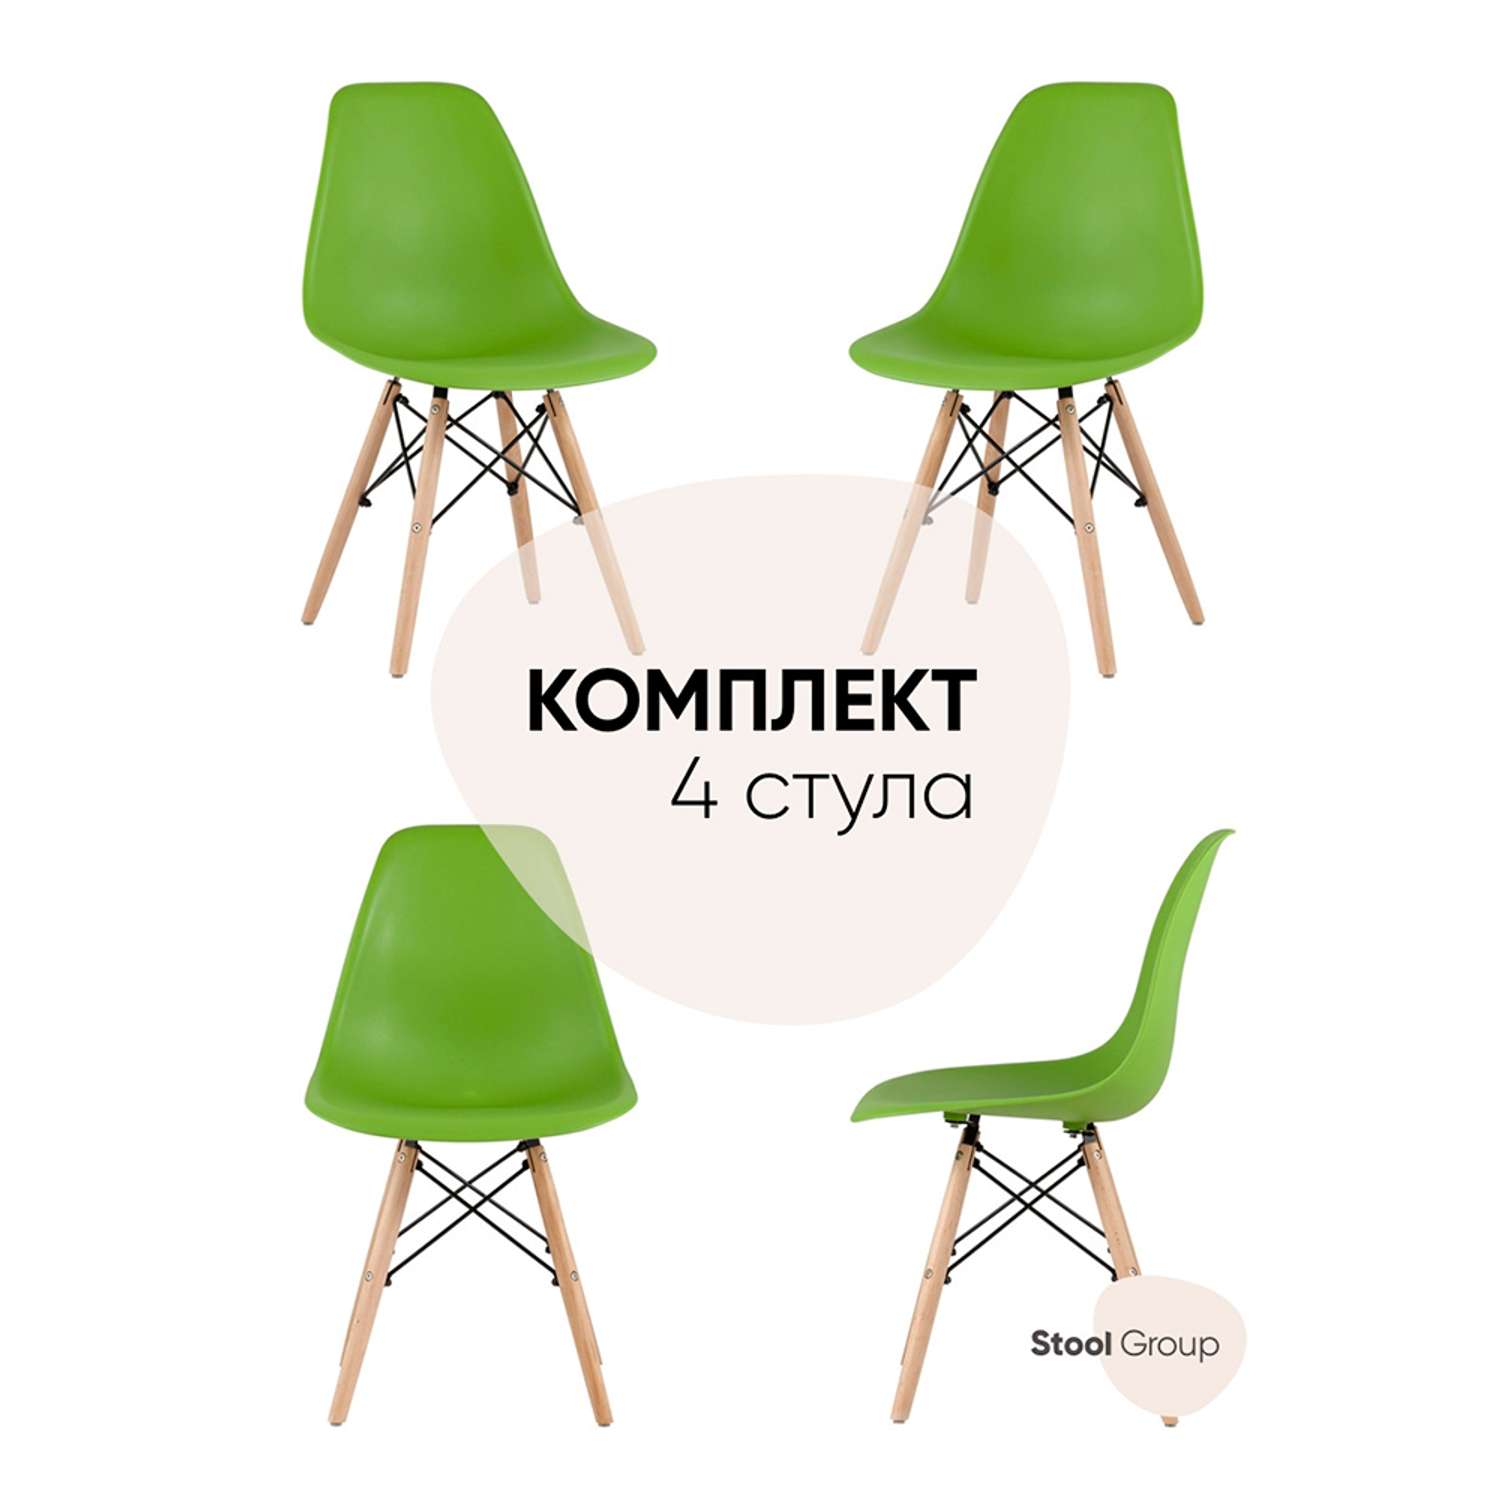 Комплект стульев Stool Group DSW Style зеленый - фото 1